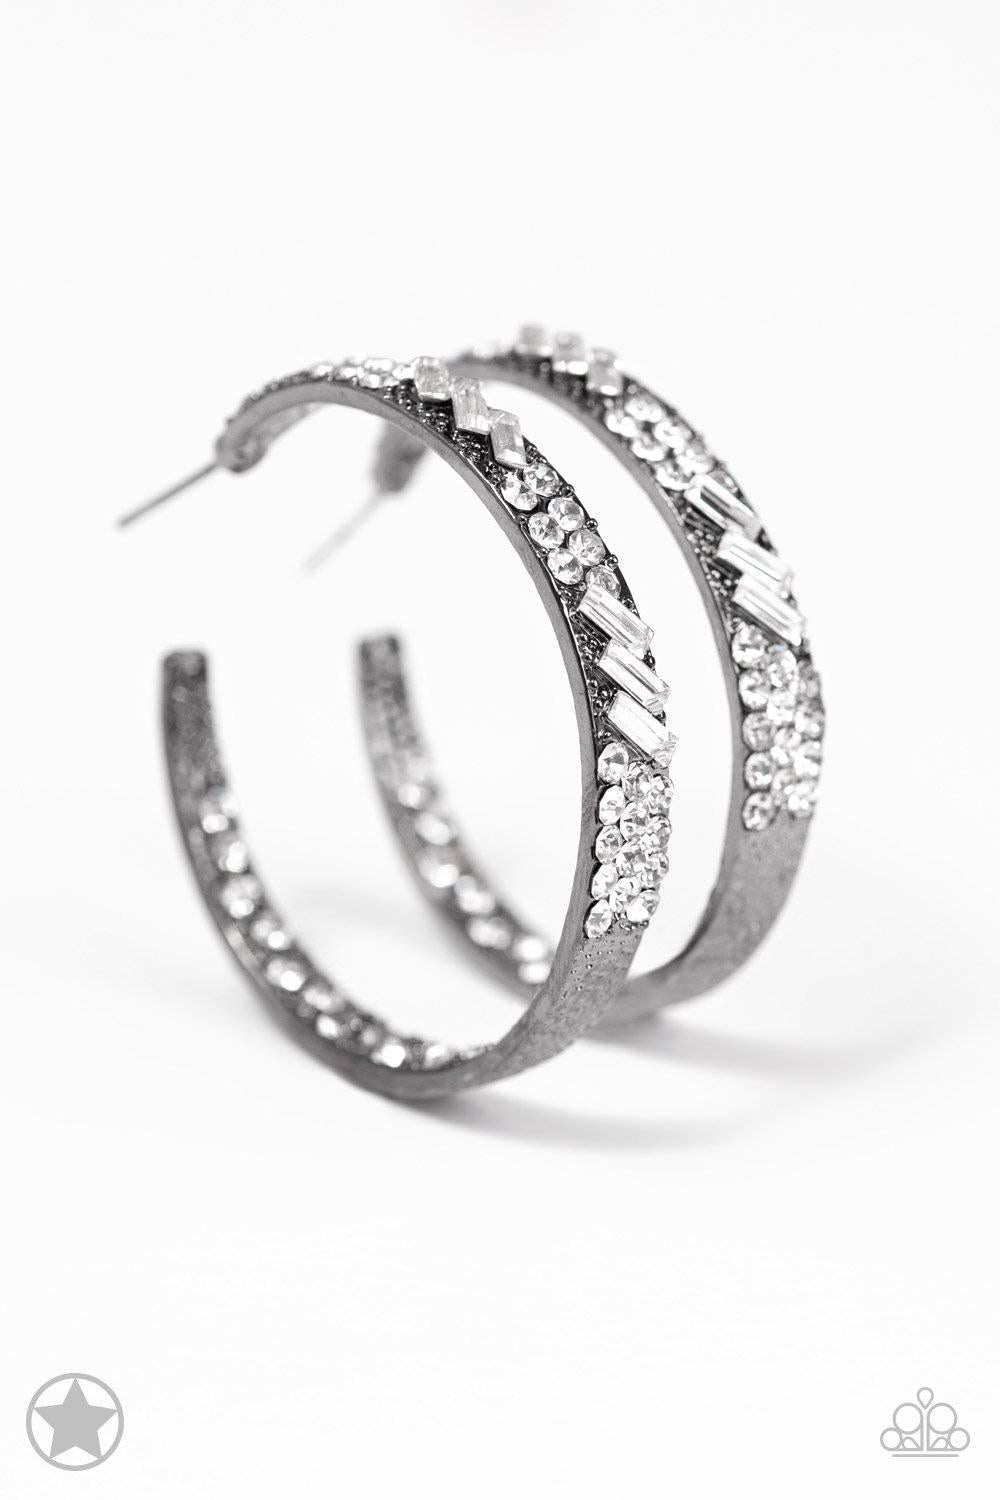 GLITZY By Association - Gunmetal Rhinestone Earrings - Paparazzi Accessories - GlaMarous Titi Jewels